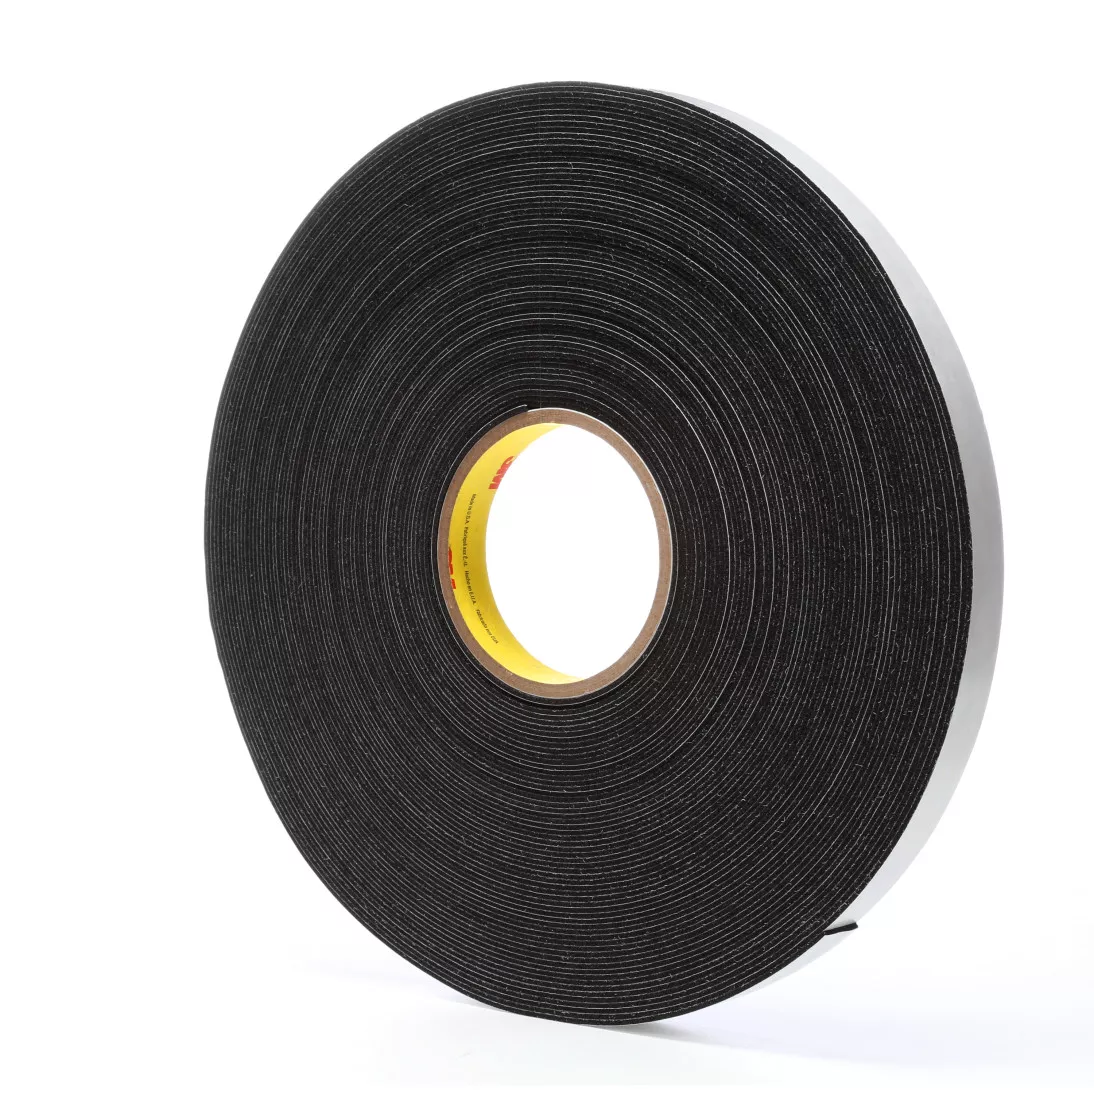 3M™ Venture Tape™ Vinyl Foam Tape 1714, Gray, 3/8 in x 50 ft, 250 mil,
32 rolls per case